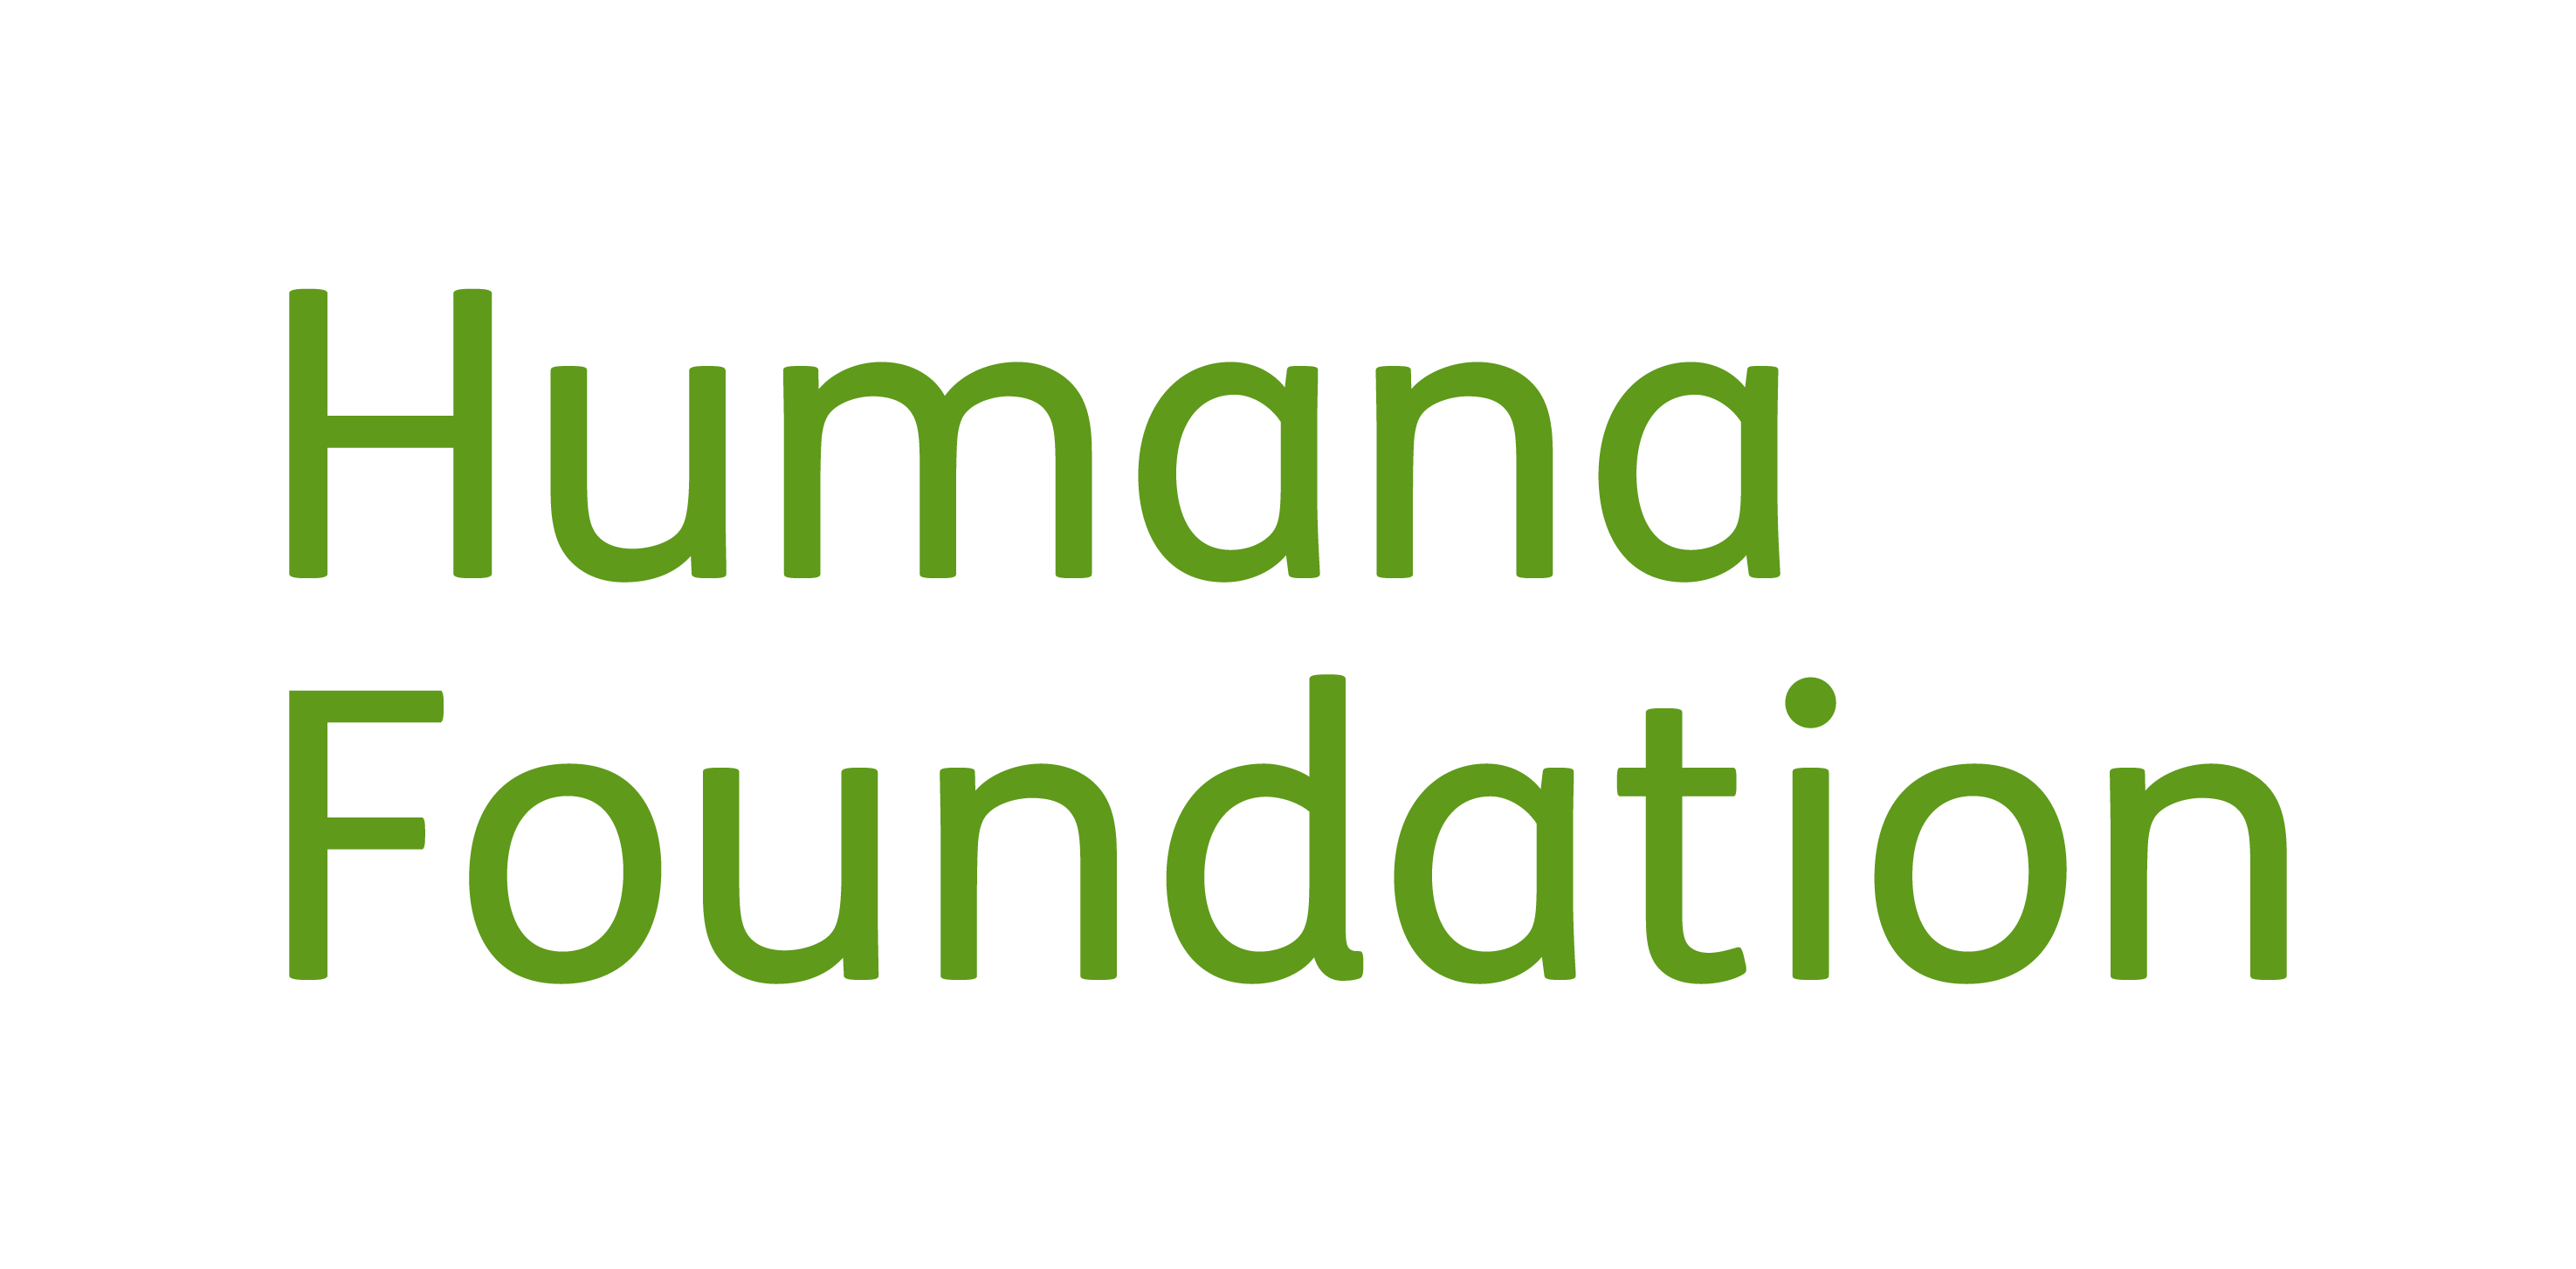 Humana foundation logo